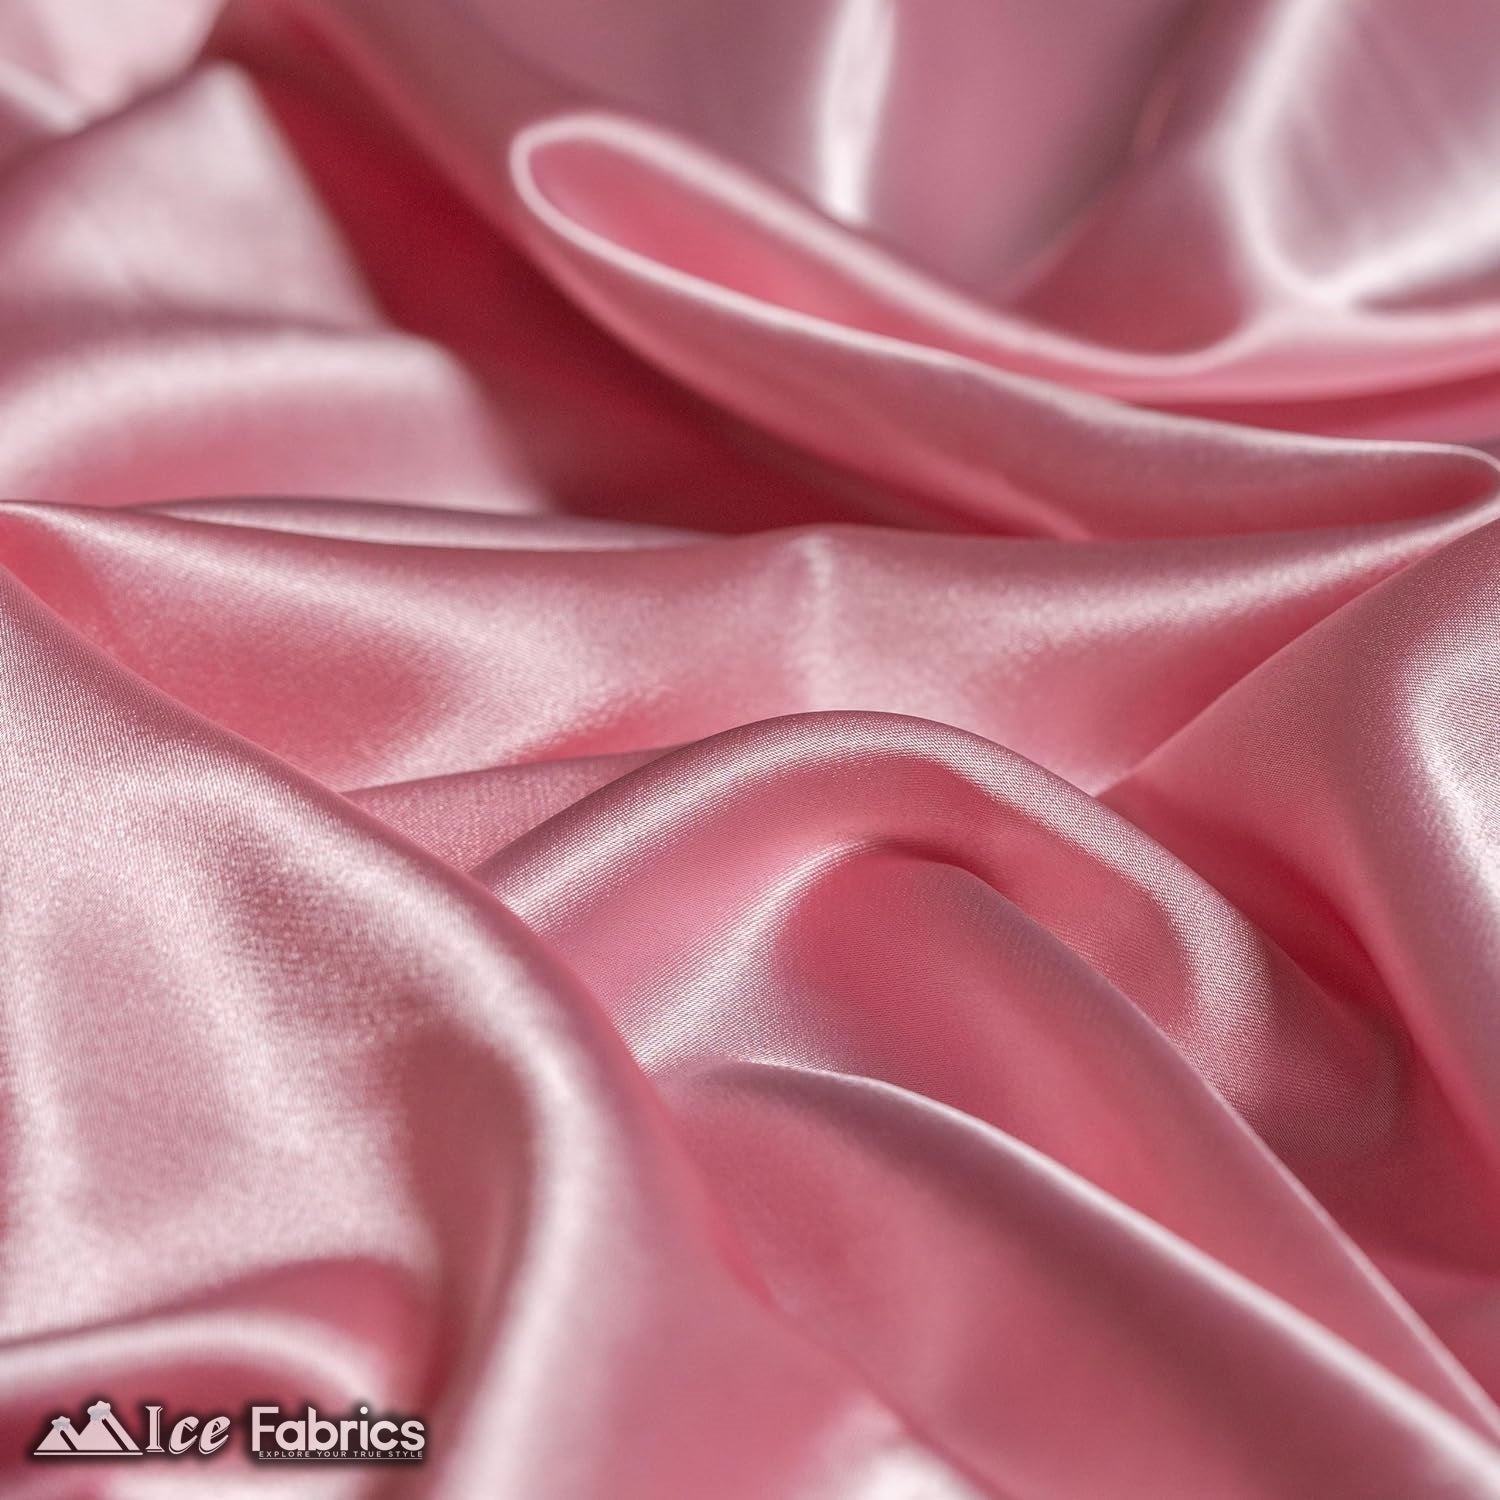 New Shiny Pink Charmeuse Stretch Satin FabricICE FABRICSICE FABRICSBy The Yard (60" Wide)New Shiny Pink Charmeuse Stretch Satin Fabric